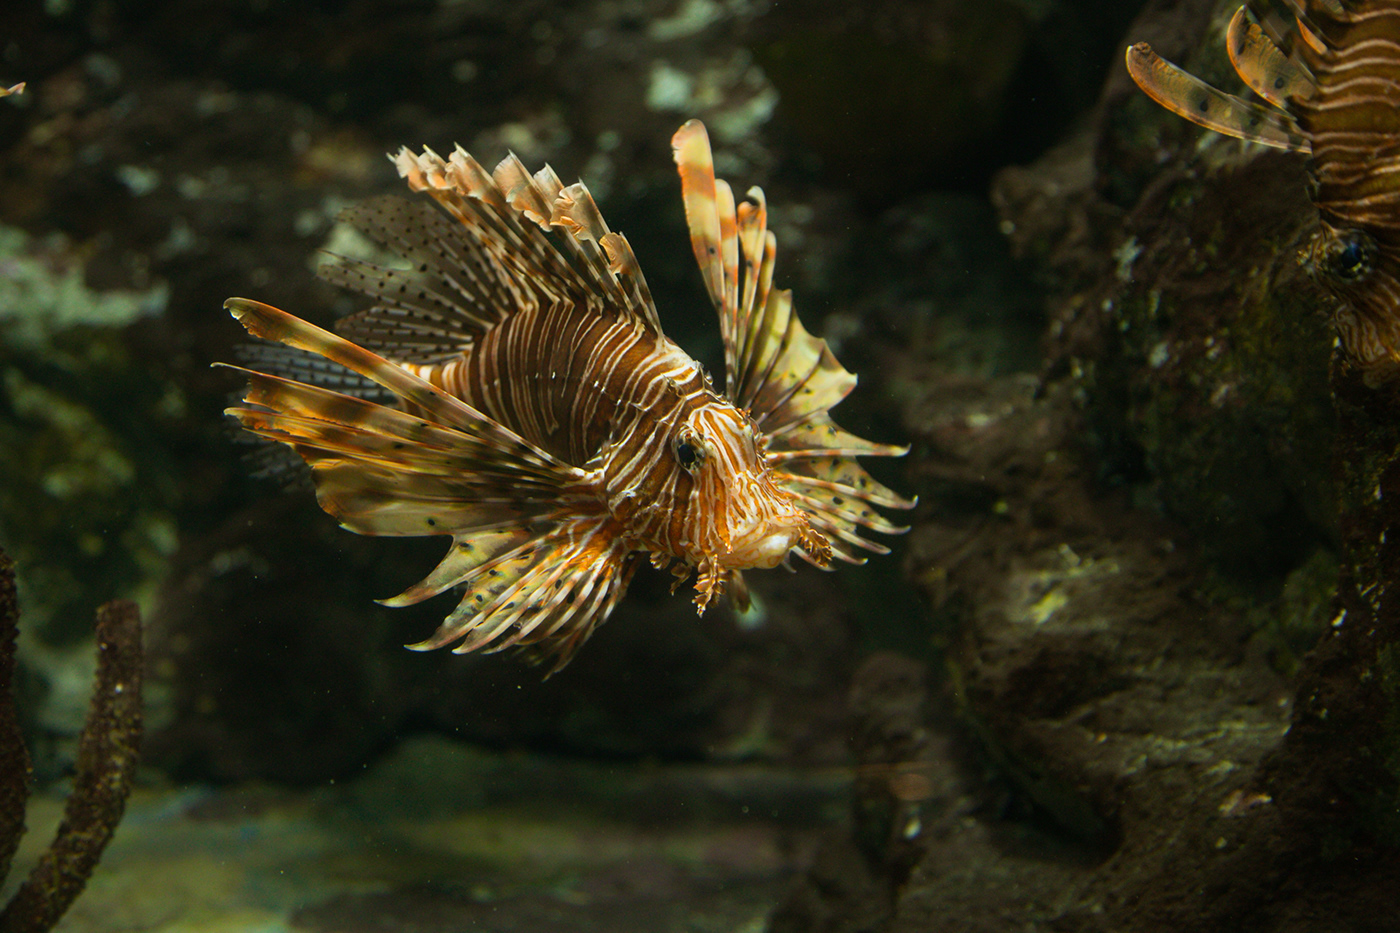 Behance animals sea fish aquarium Nature Photography  beauty